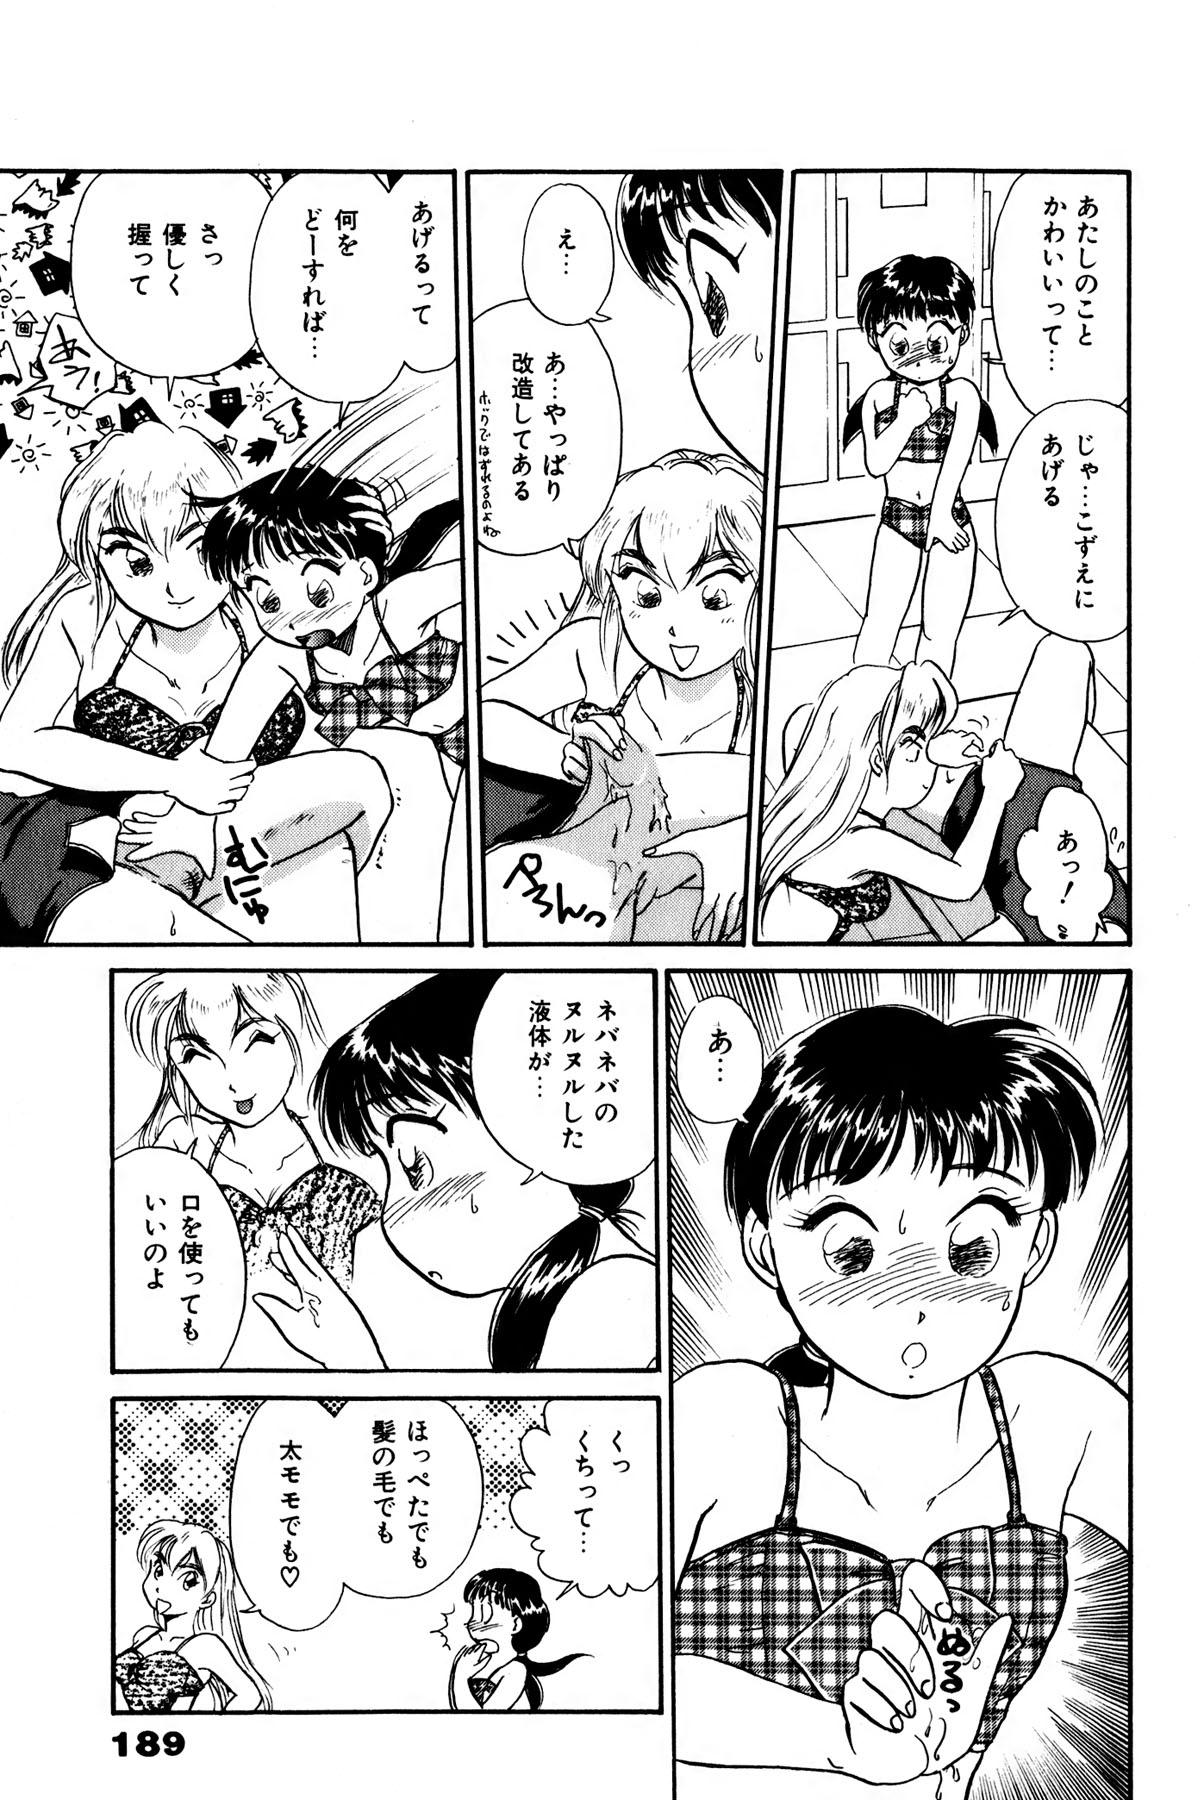 Otakara Comic 189